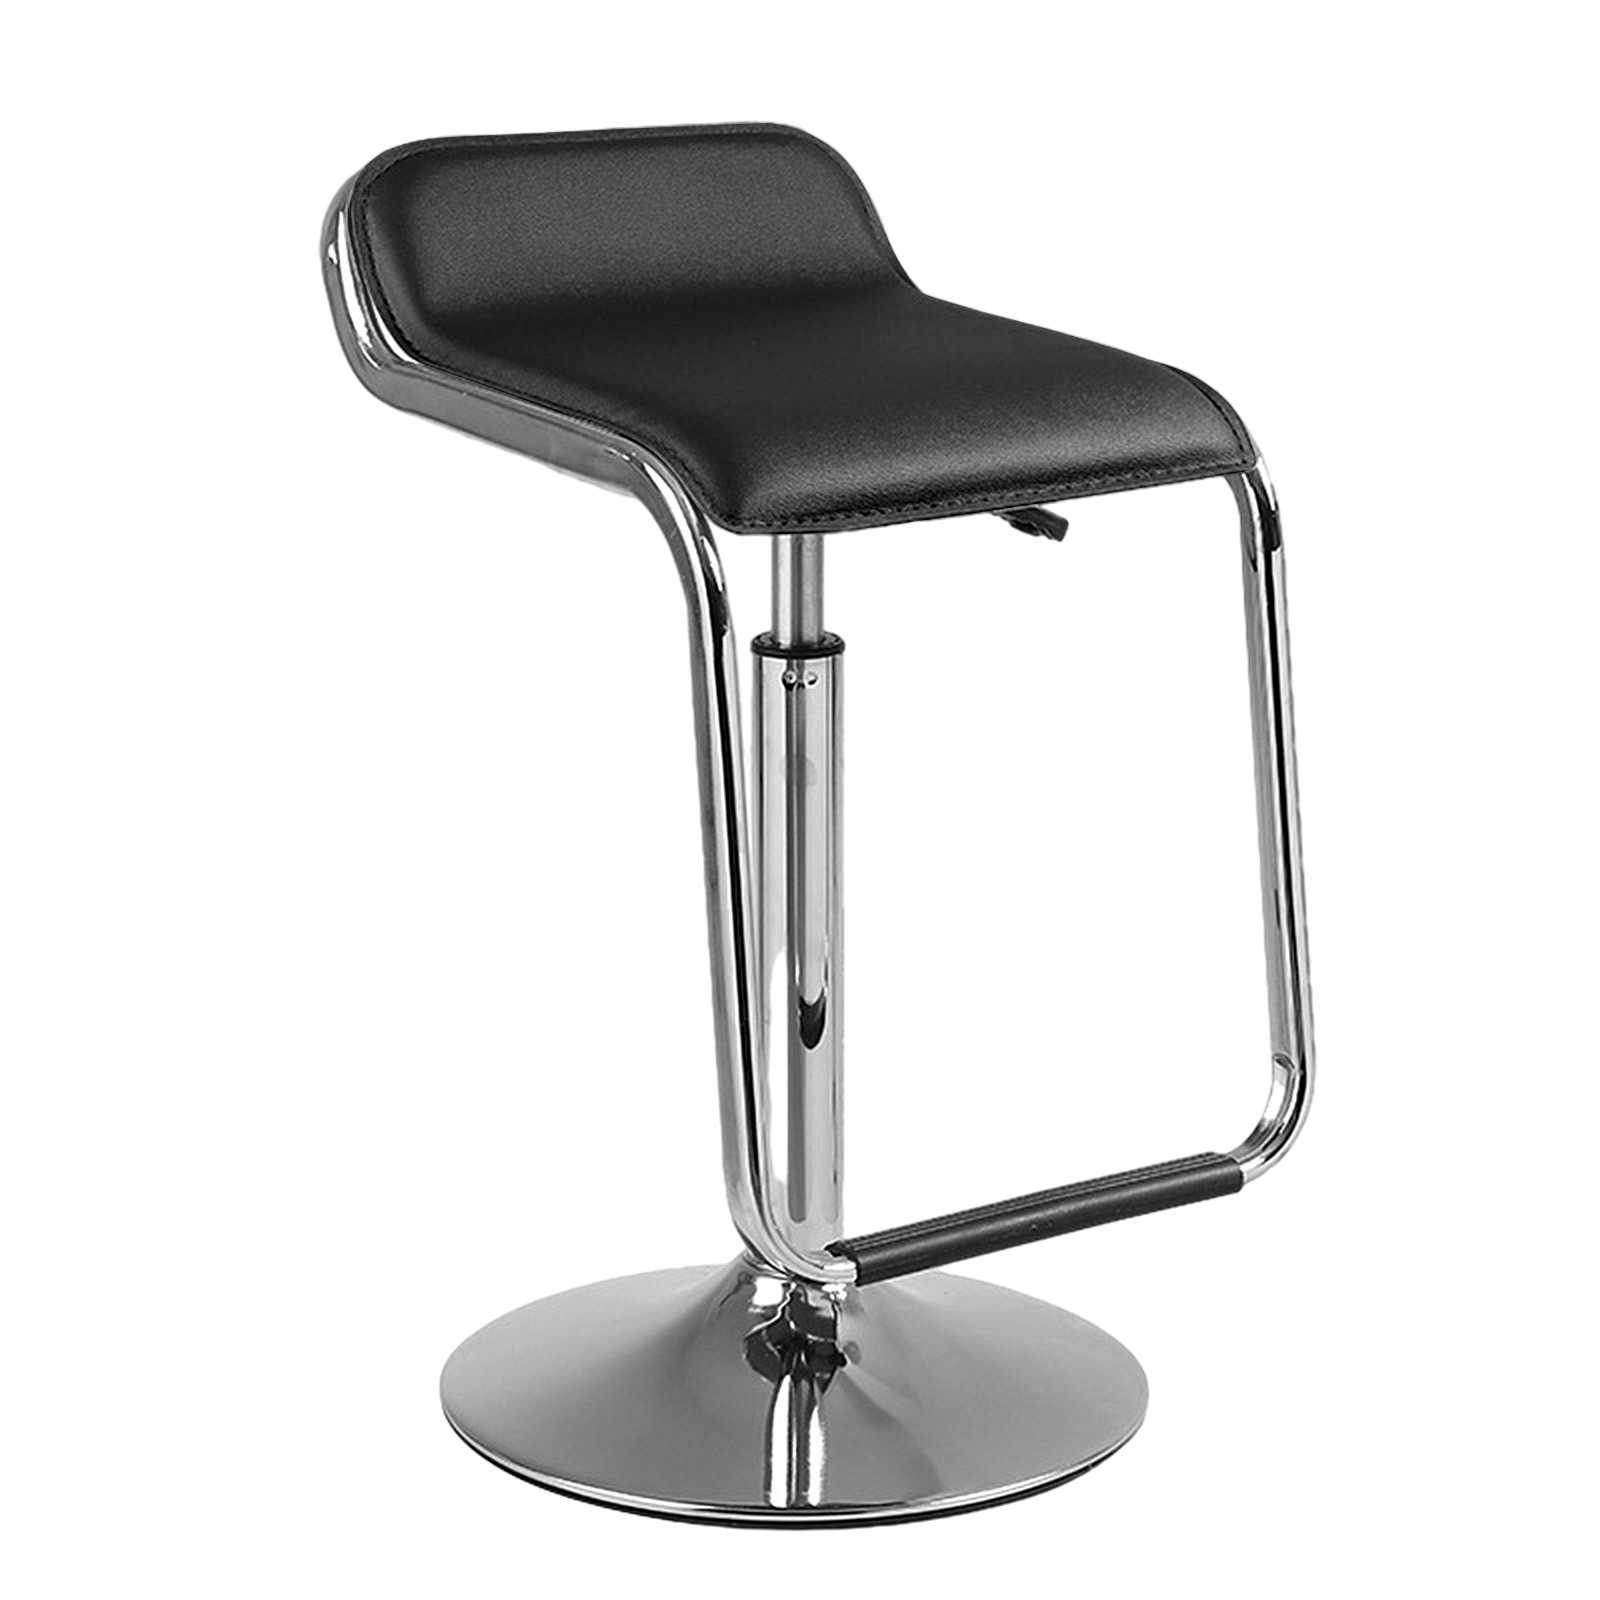 S chair round drag - Black